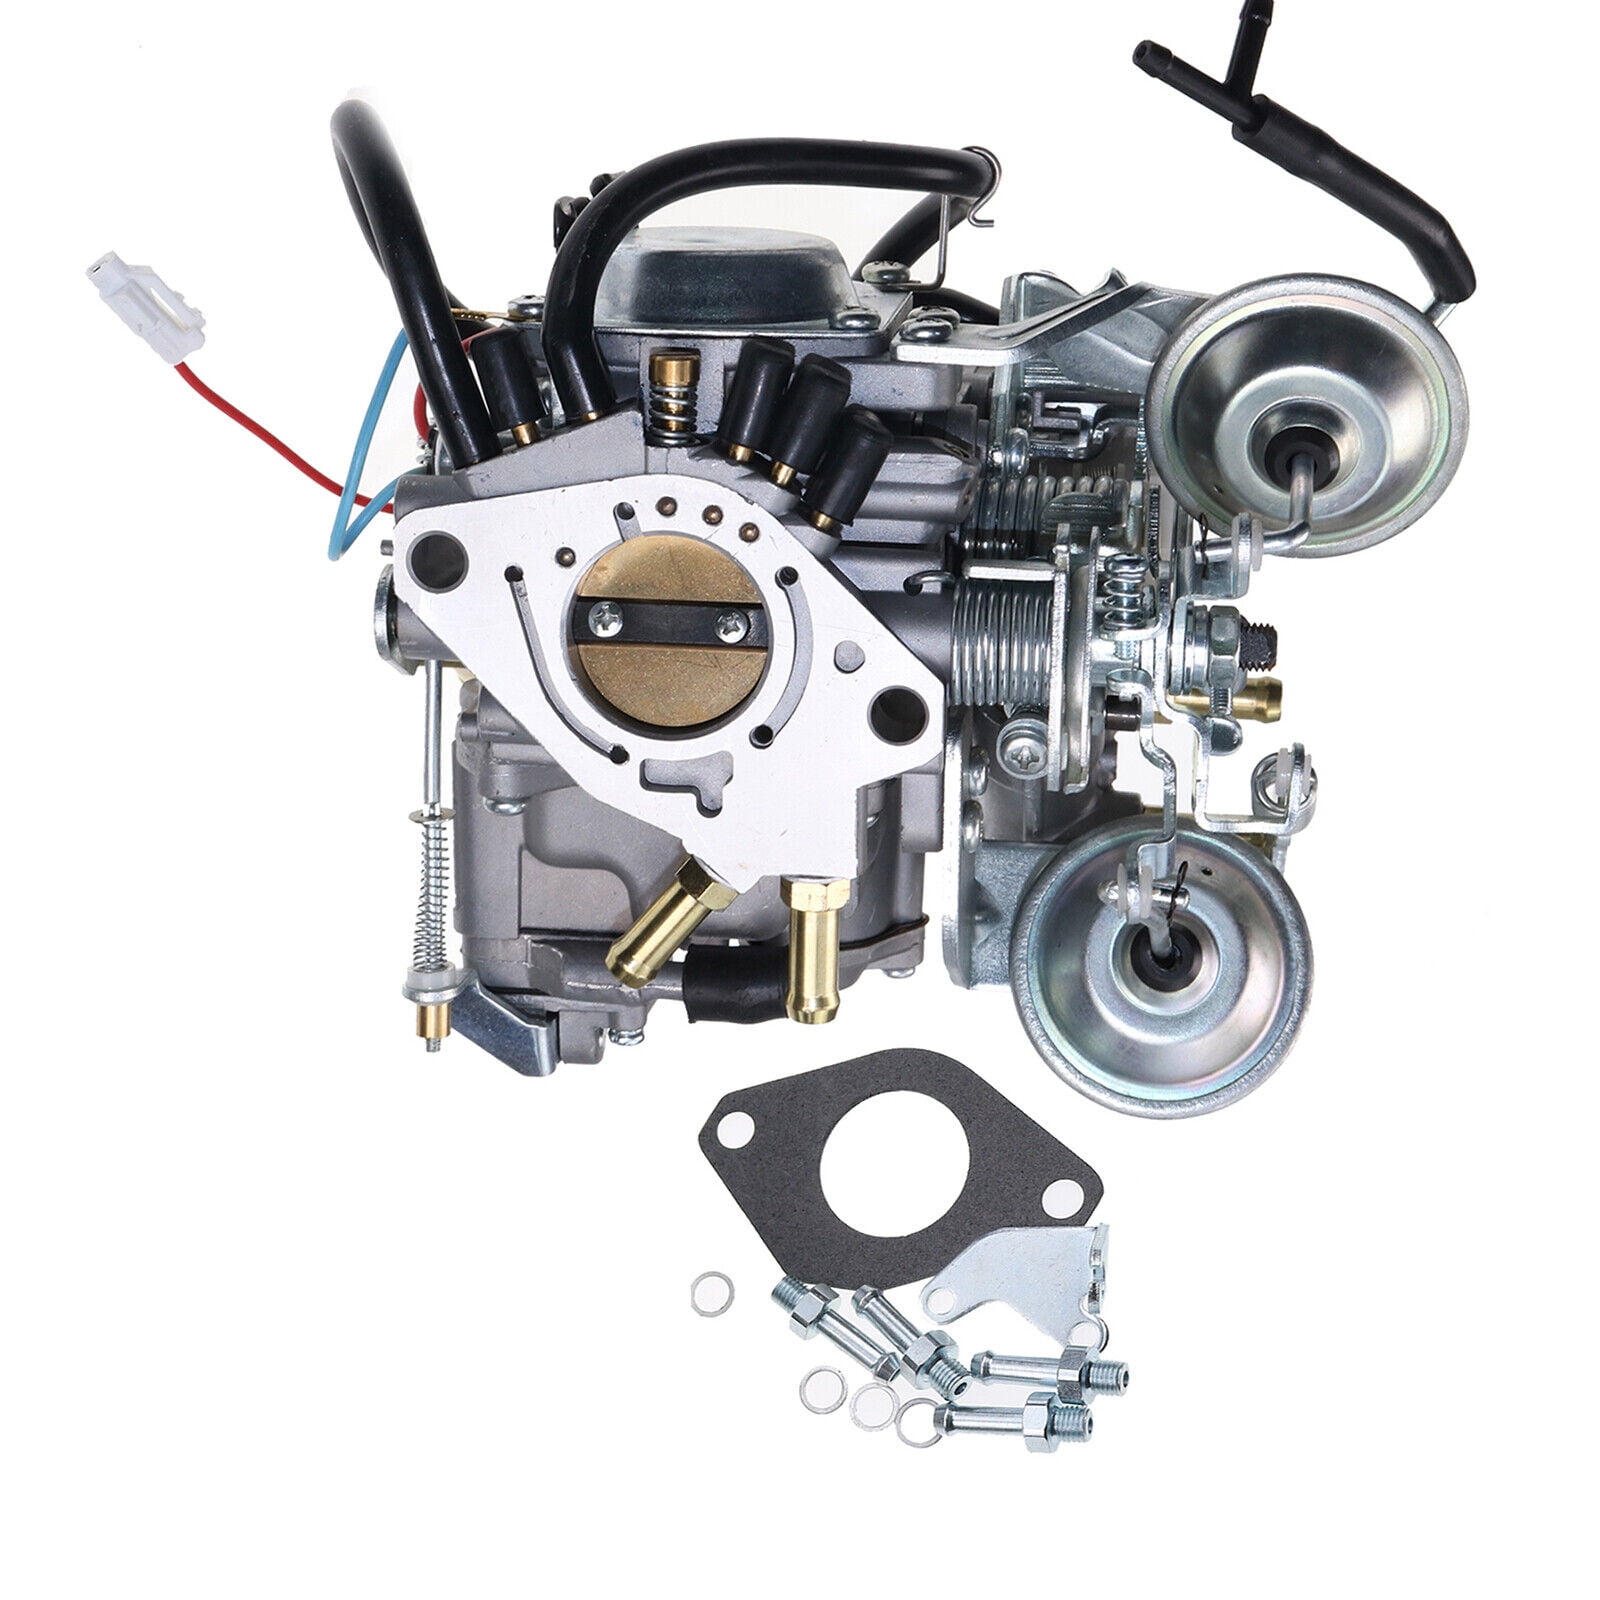 Honda Atc 110 Carburetor